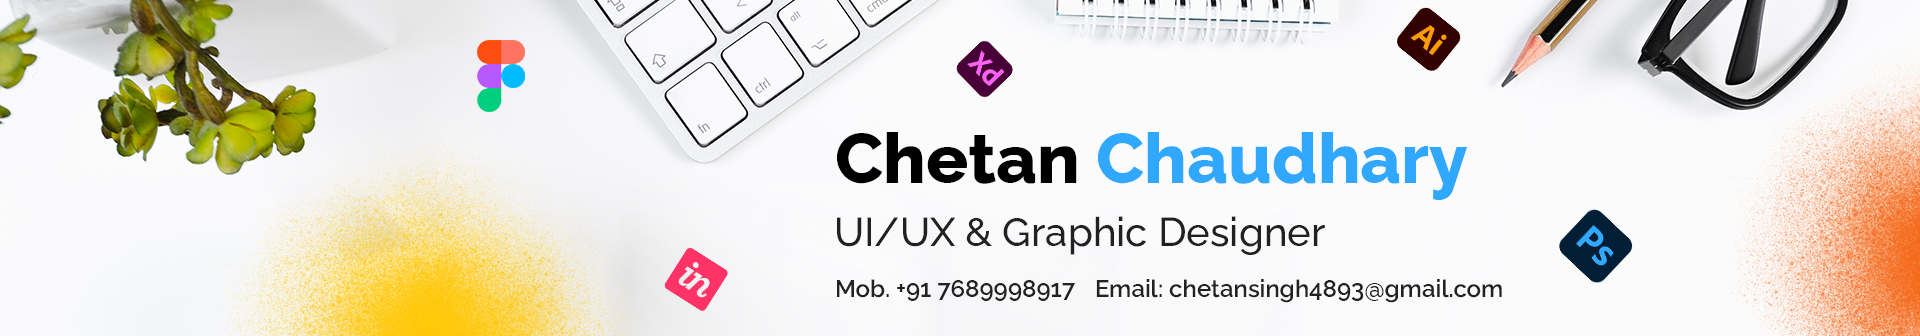 Chetan Chaudharys profilbanner